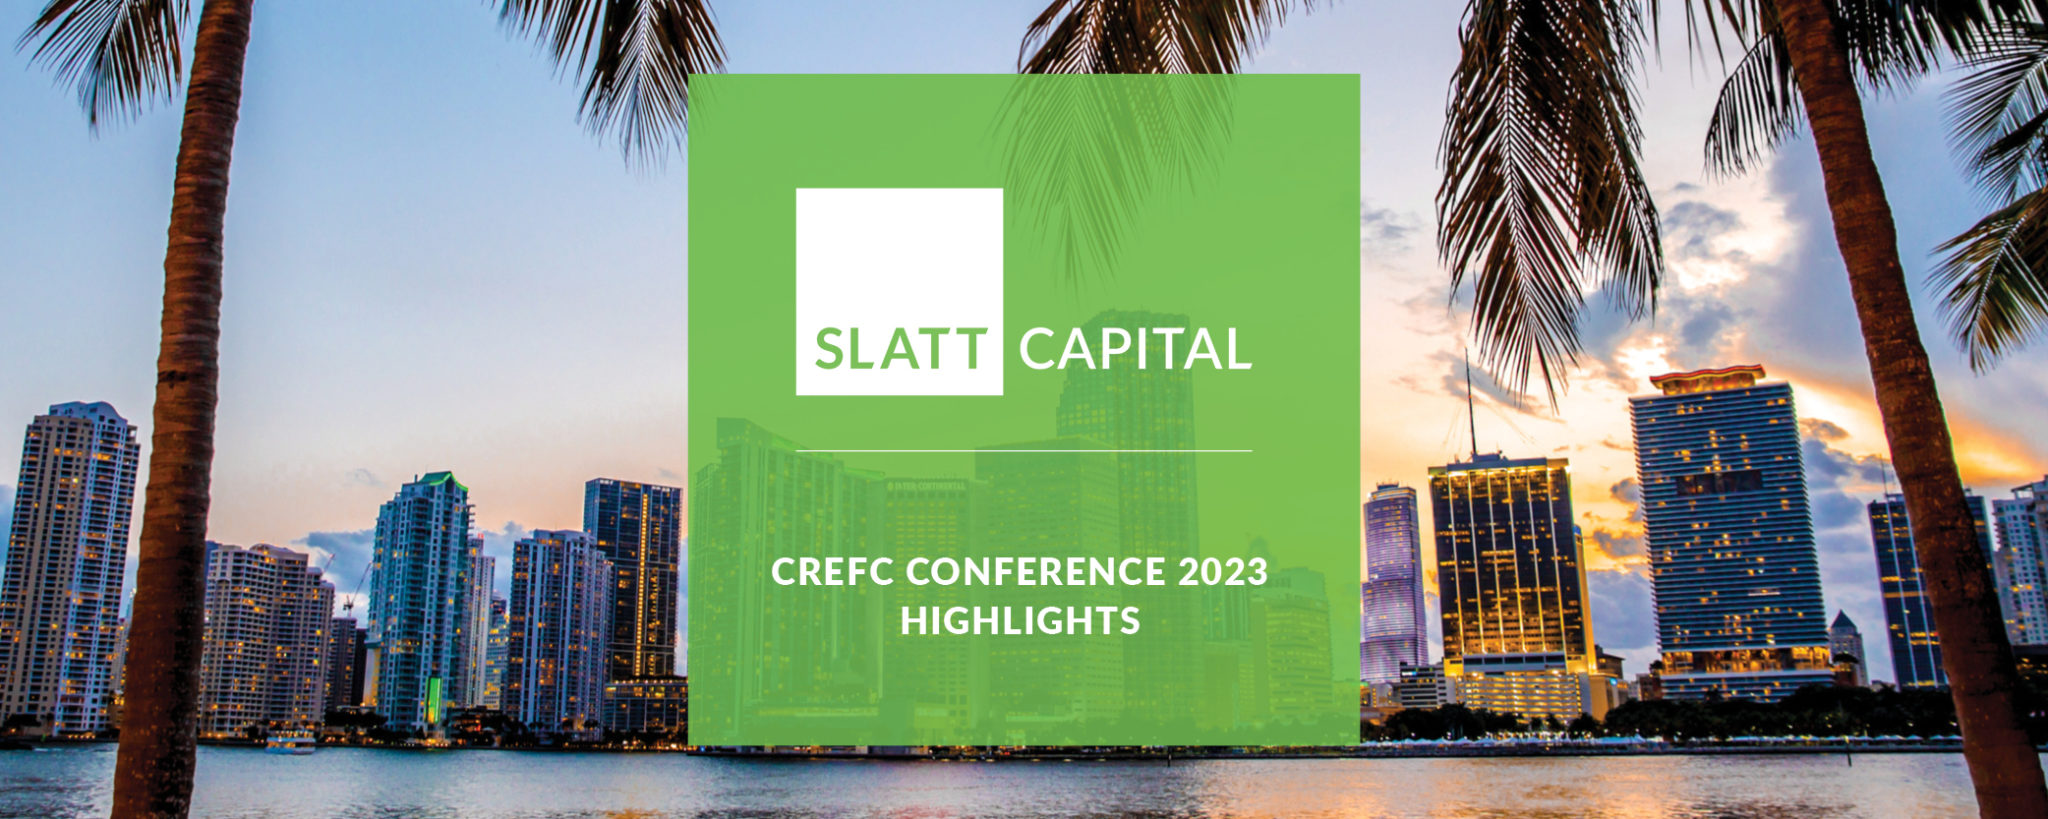 CREFC Conference Miami 2023 Highlights Slatt Capital